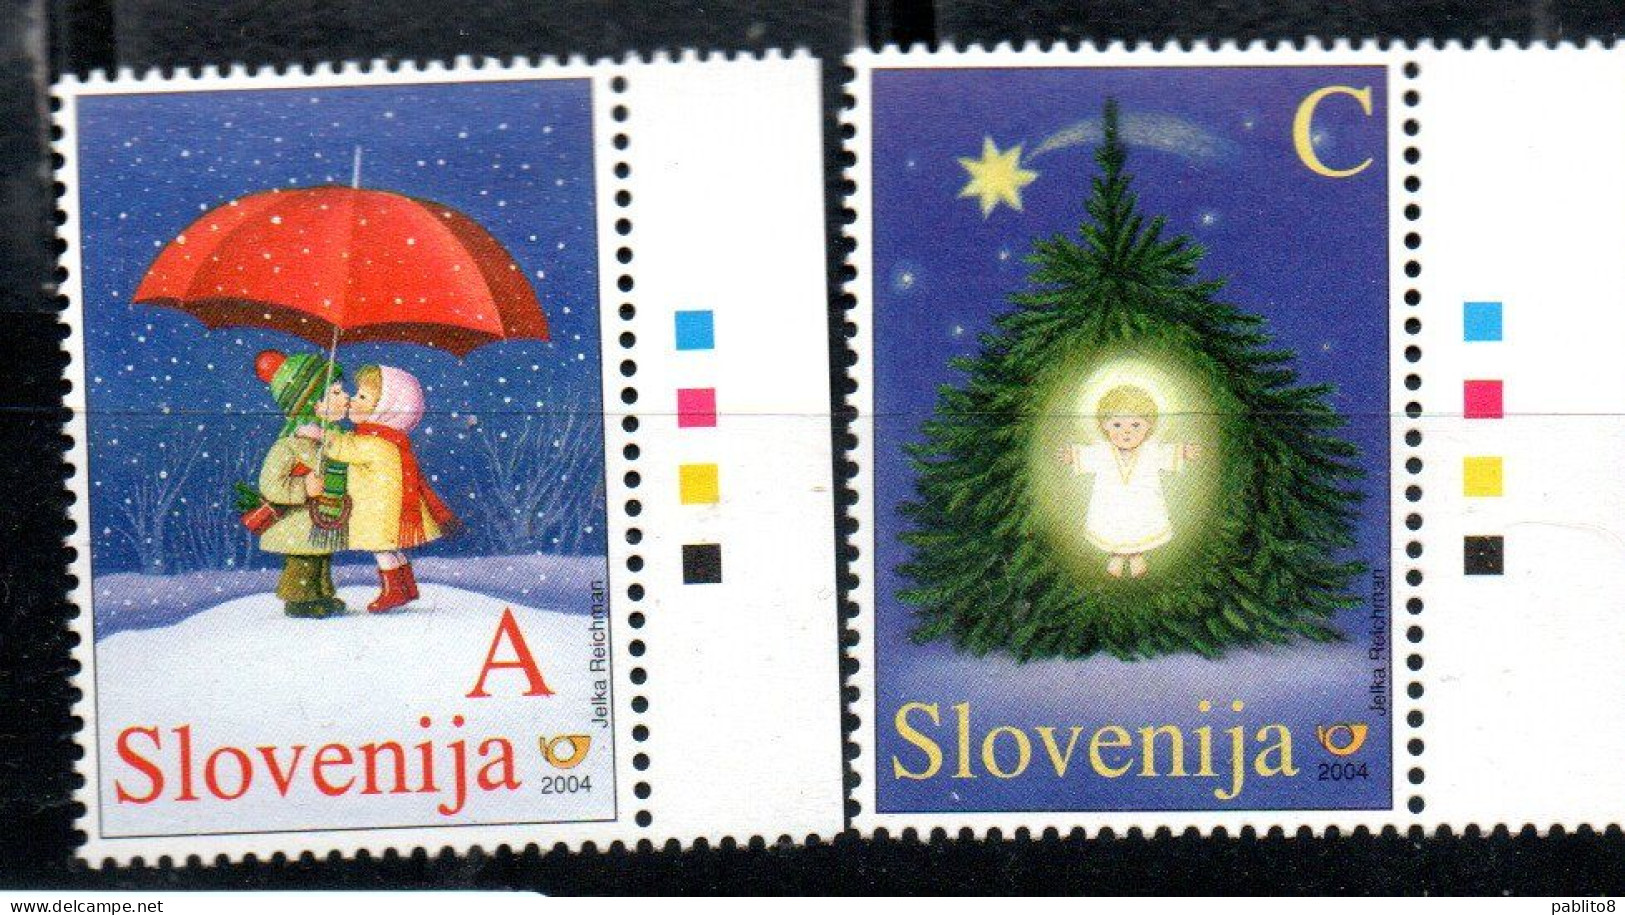 SLOVENIA SLOVENIJA SLOVENIE SLOWENIEN 2004 CHRISTMAS NATALE NOEL WEIHNACHTEN NAVIDAD COMPLETE SET SERIE COMPLETA MNH - Slovenië